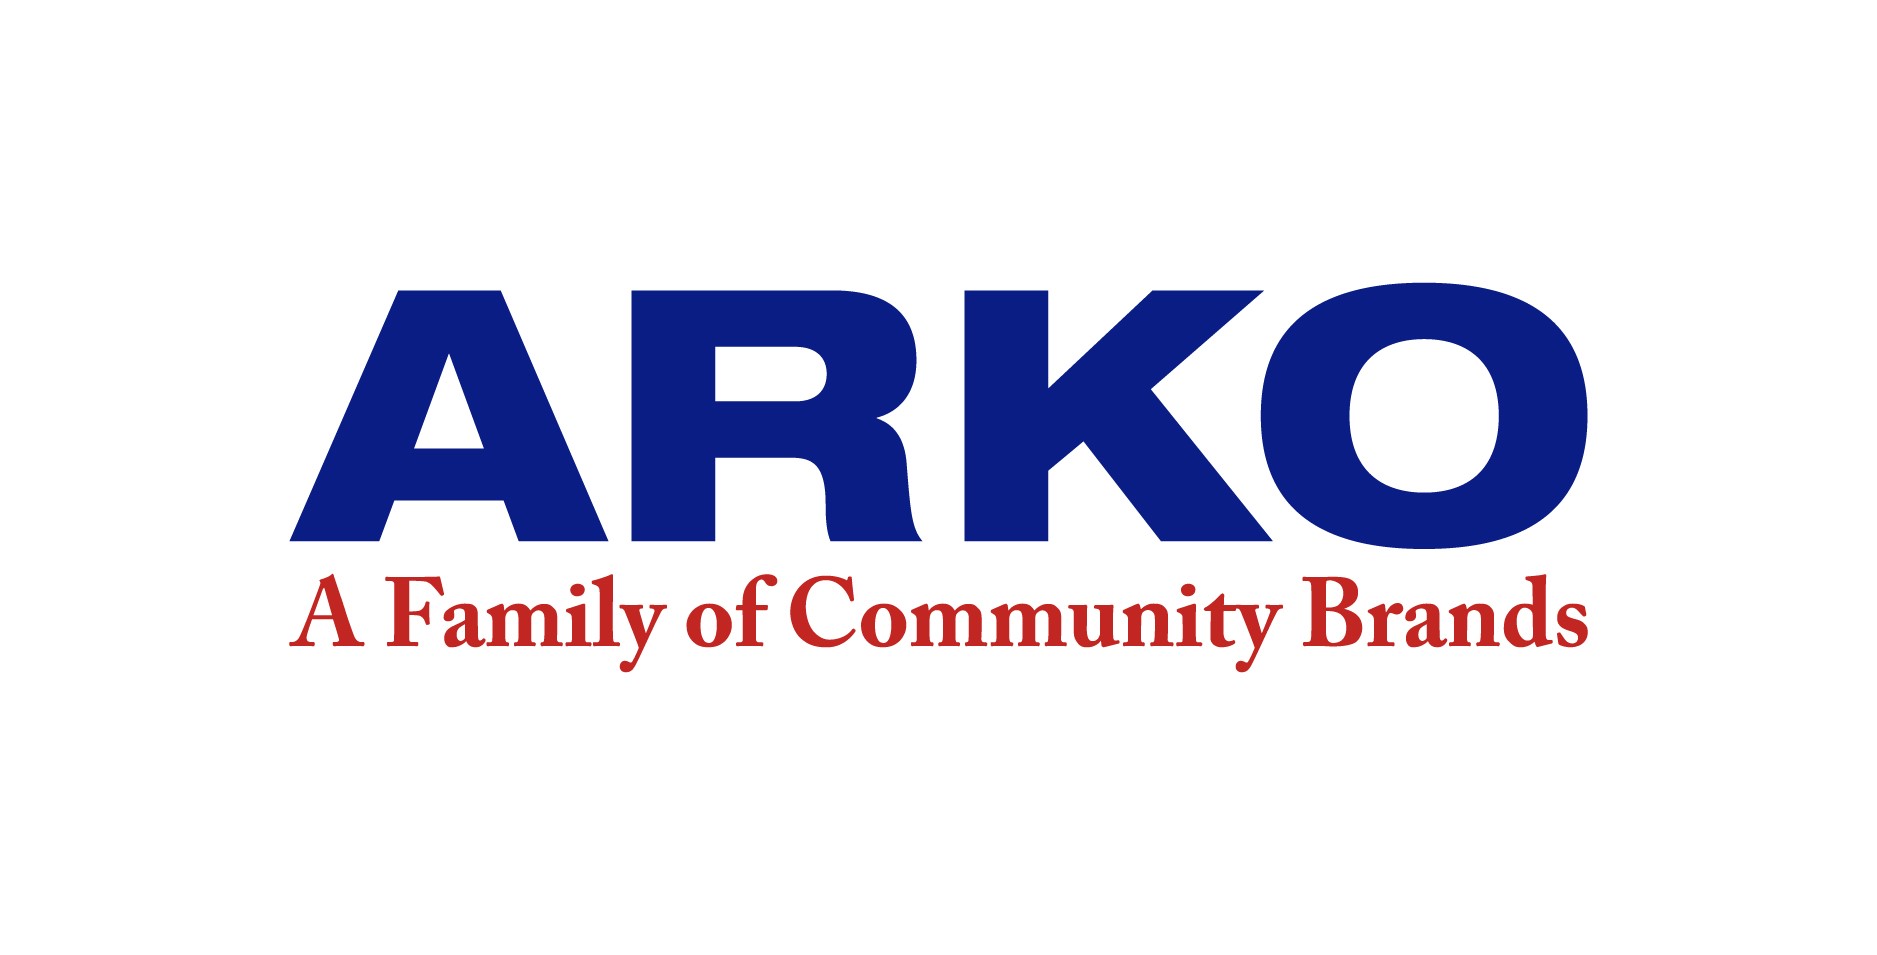 Arko Logo